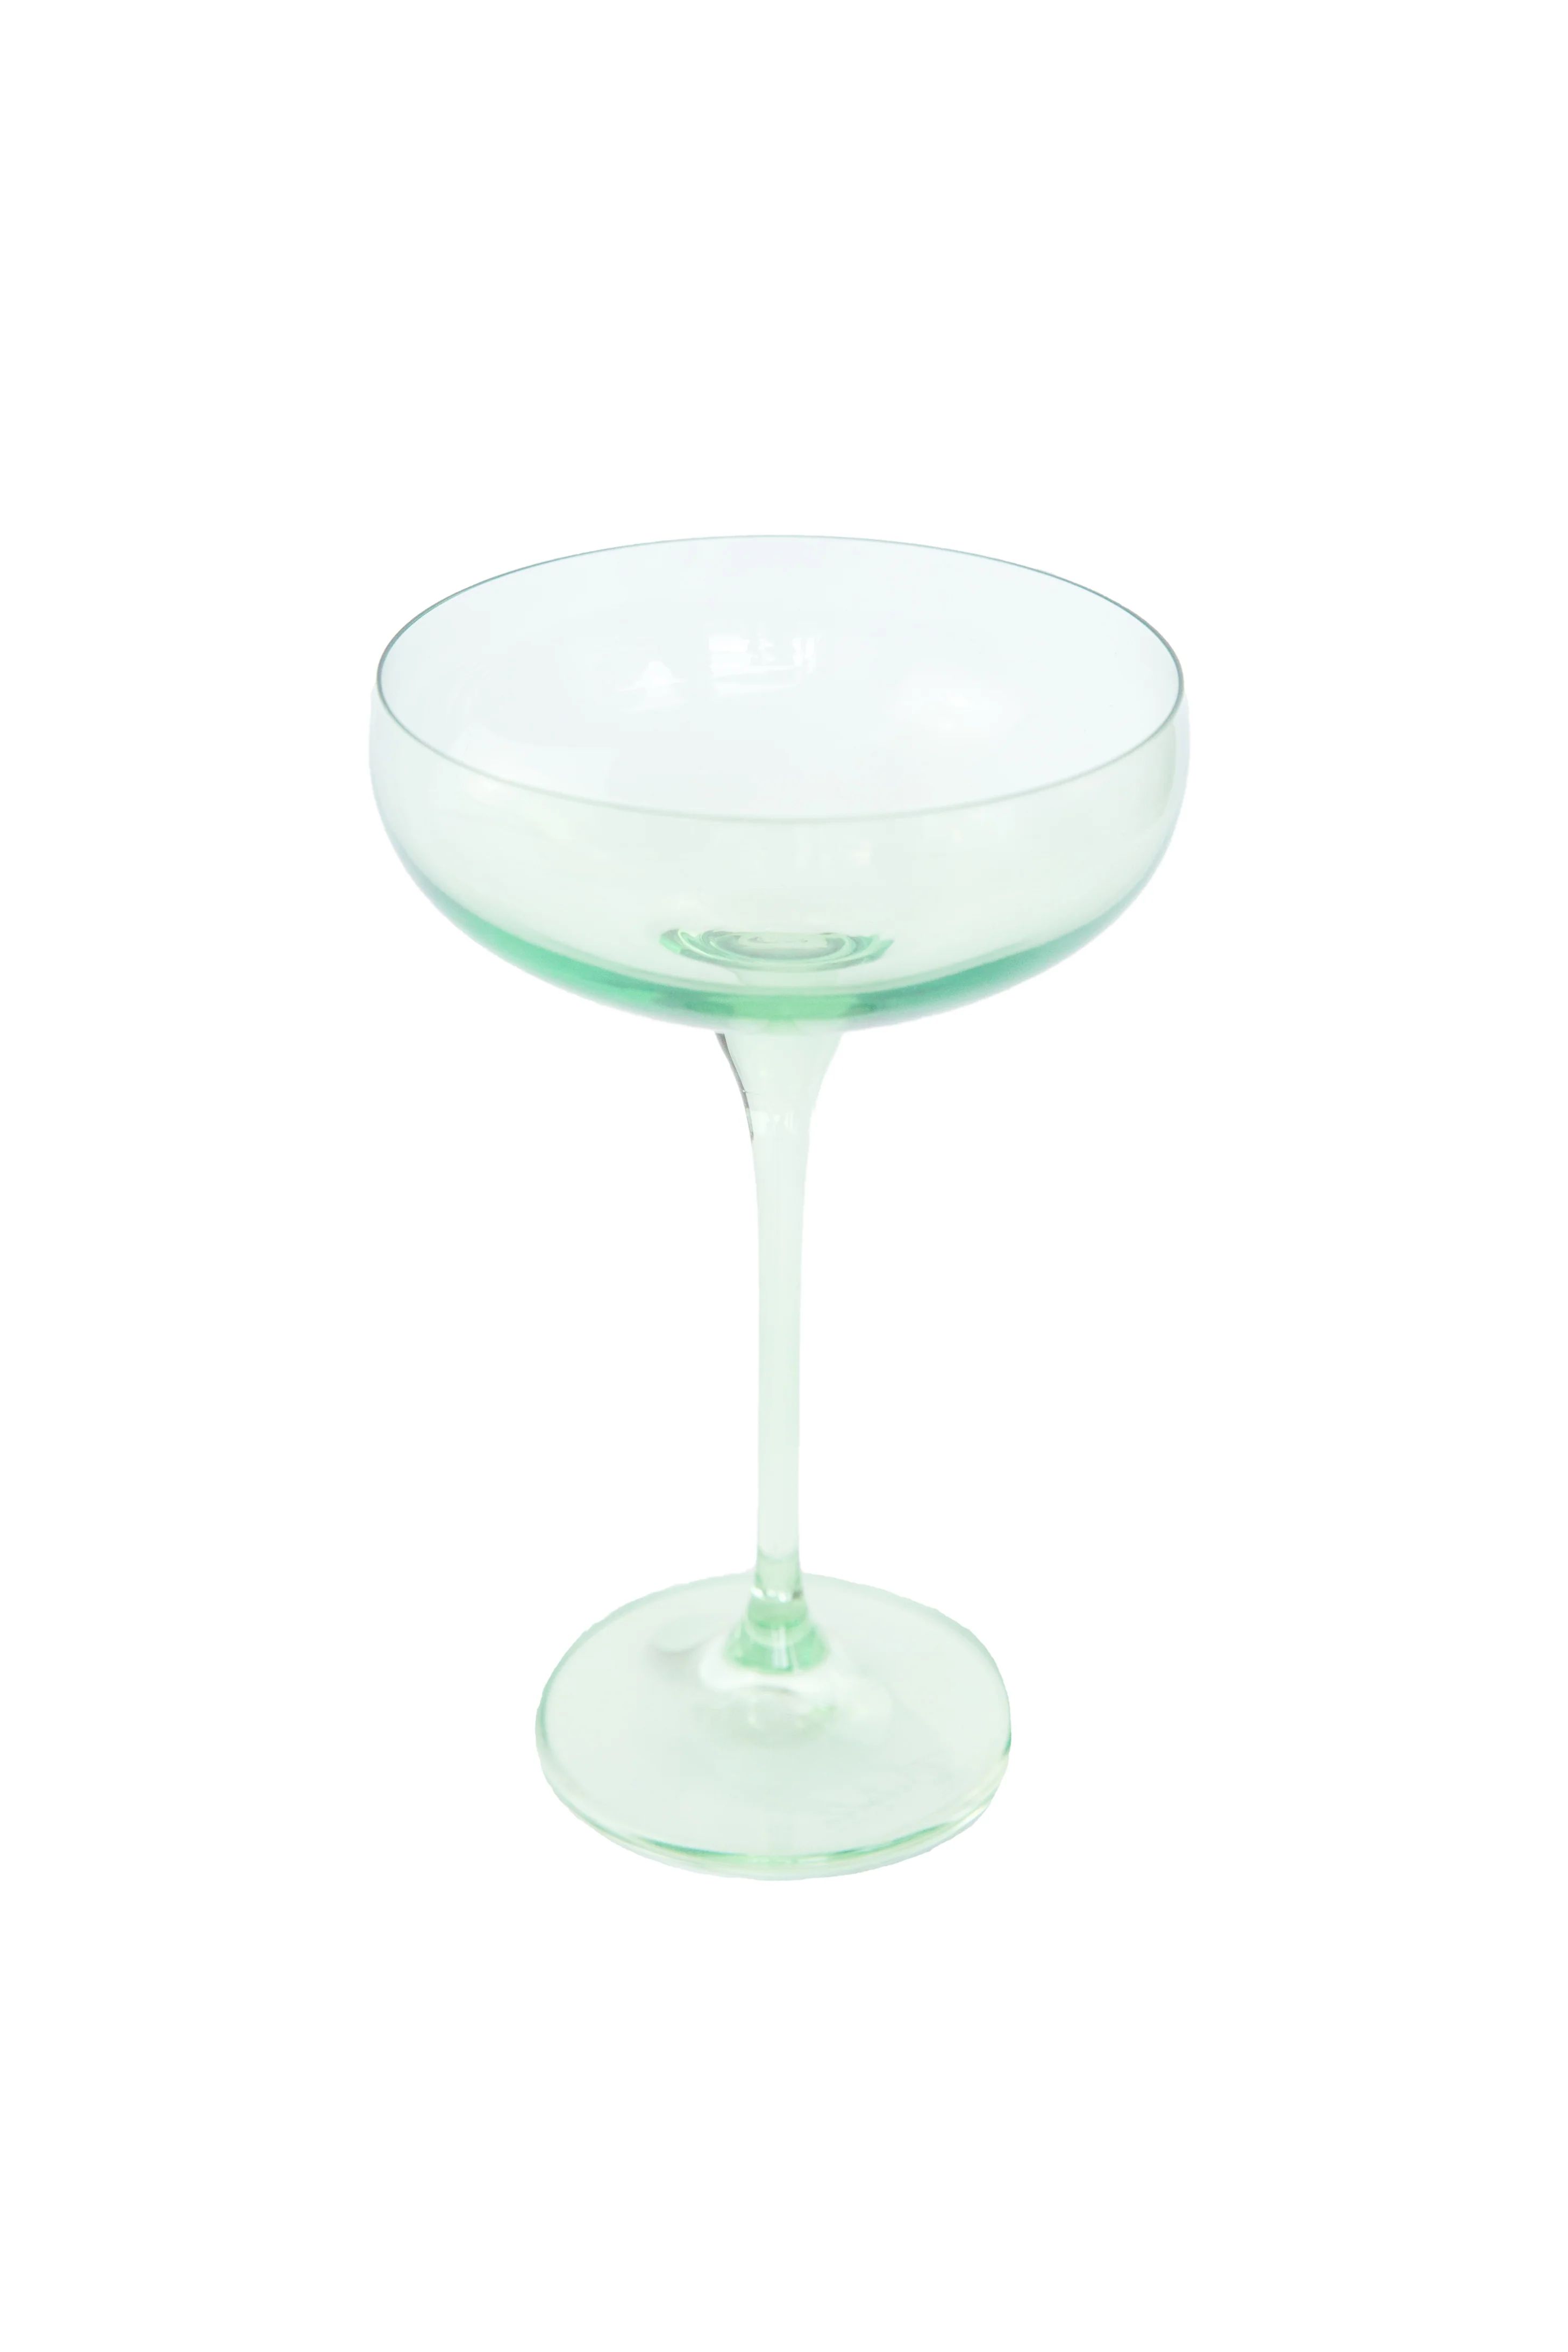 Estelle Colored Champagne Coupe Stemware - Set of 6 {Mint Green} | Estelle Colored Glass